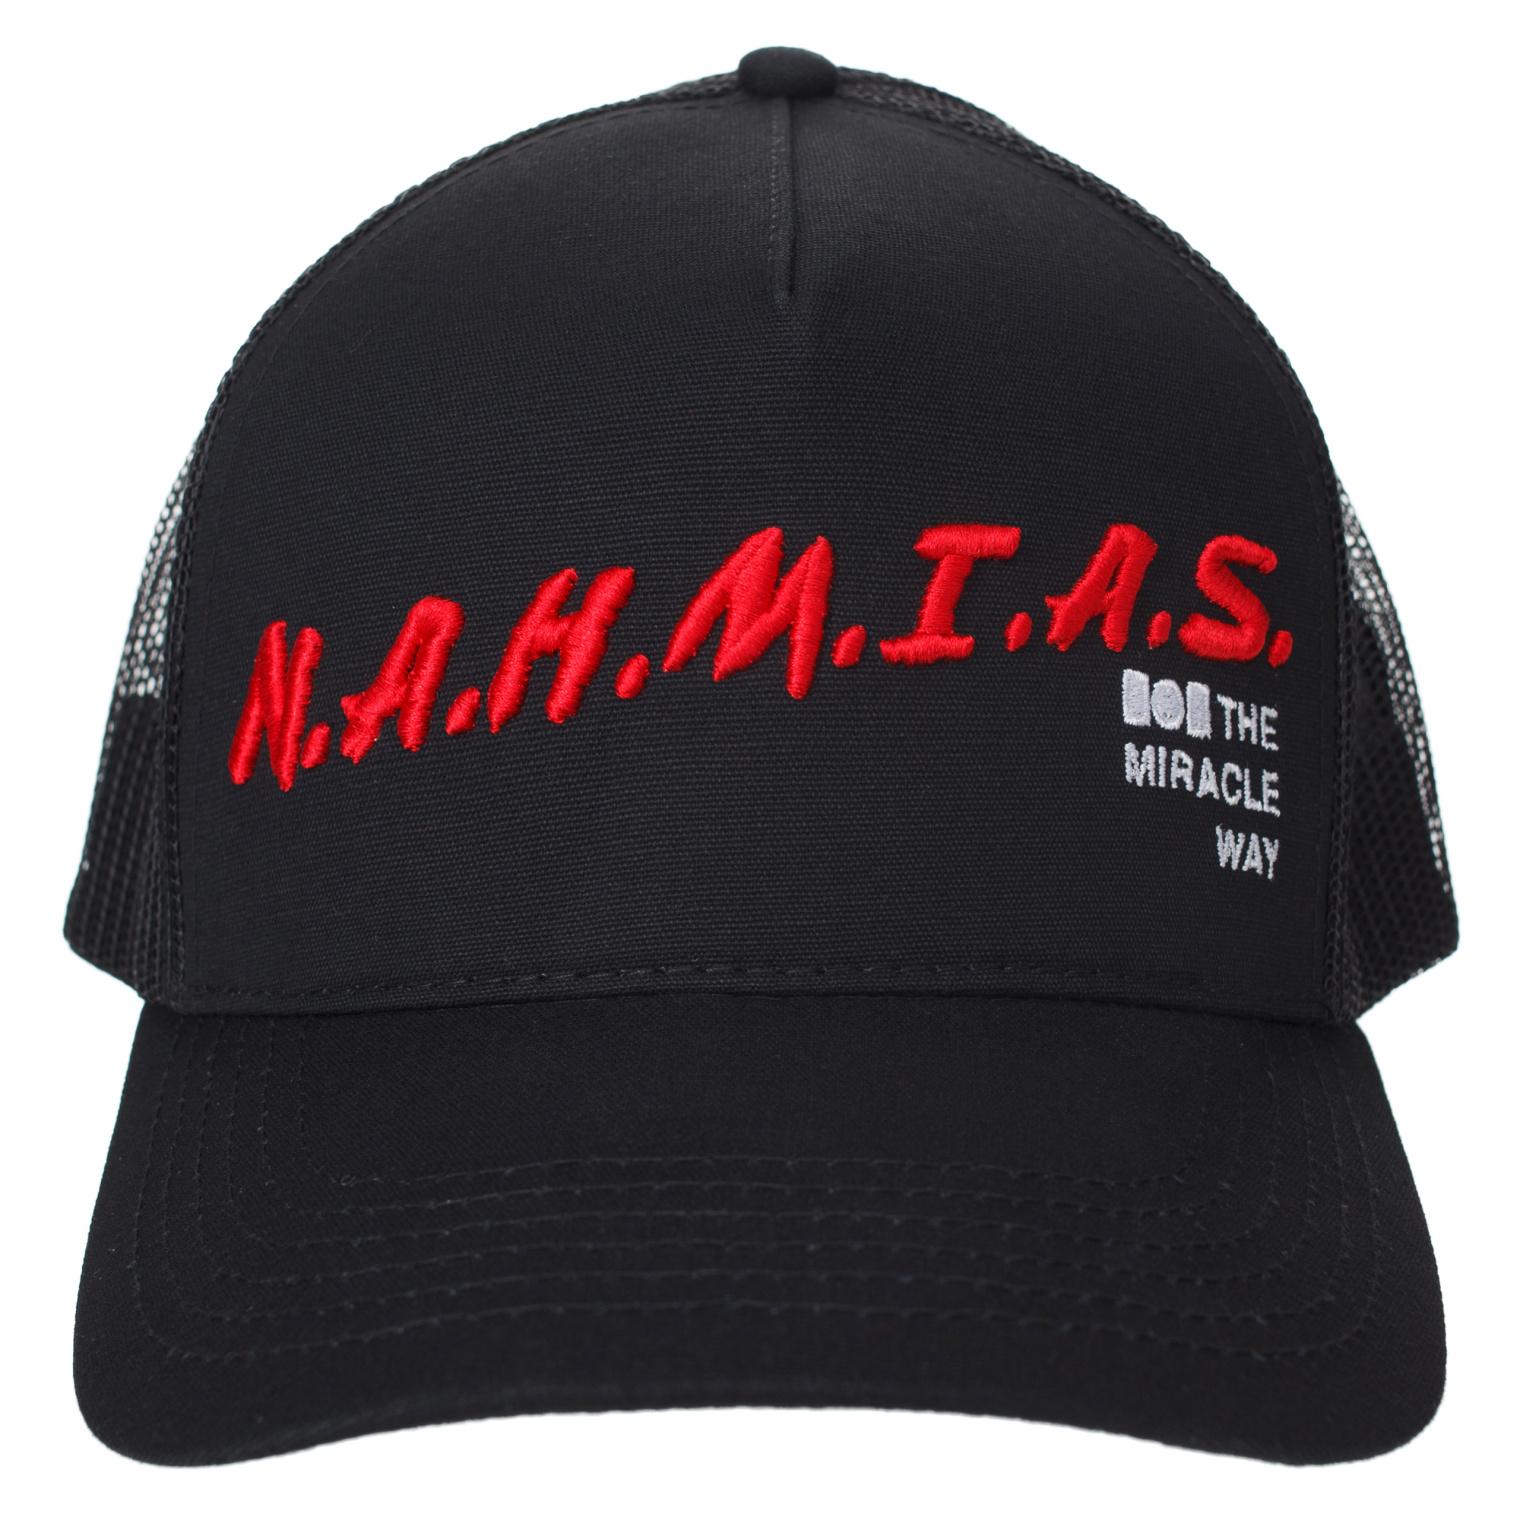 Nahmias Embroidered logo cap